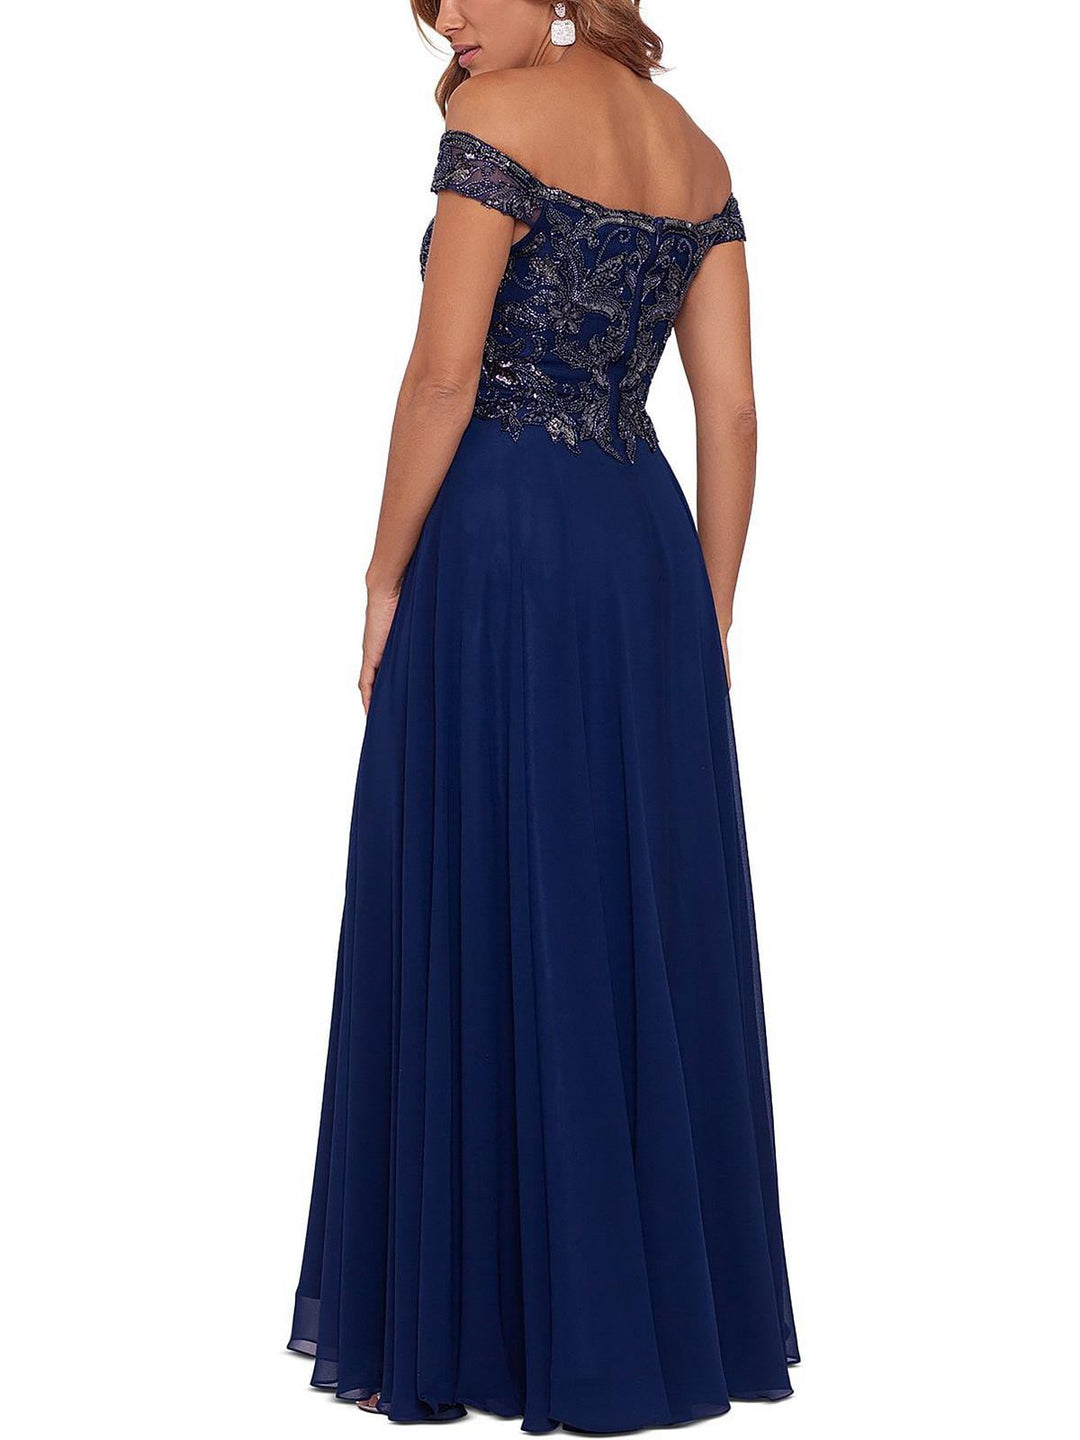 XSCAPE Women's Embellished Maxi Evening Dress Blue Size 18